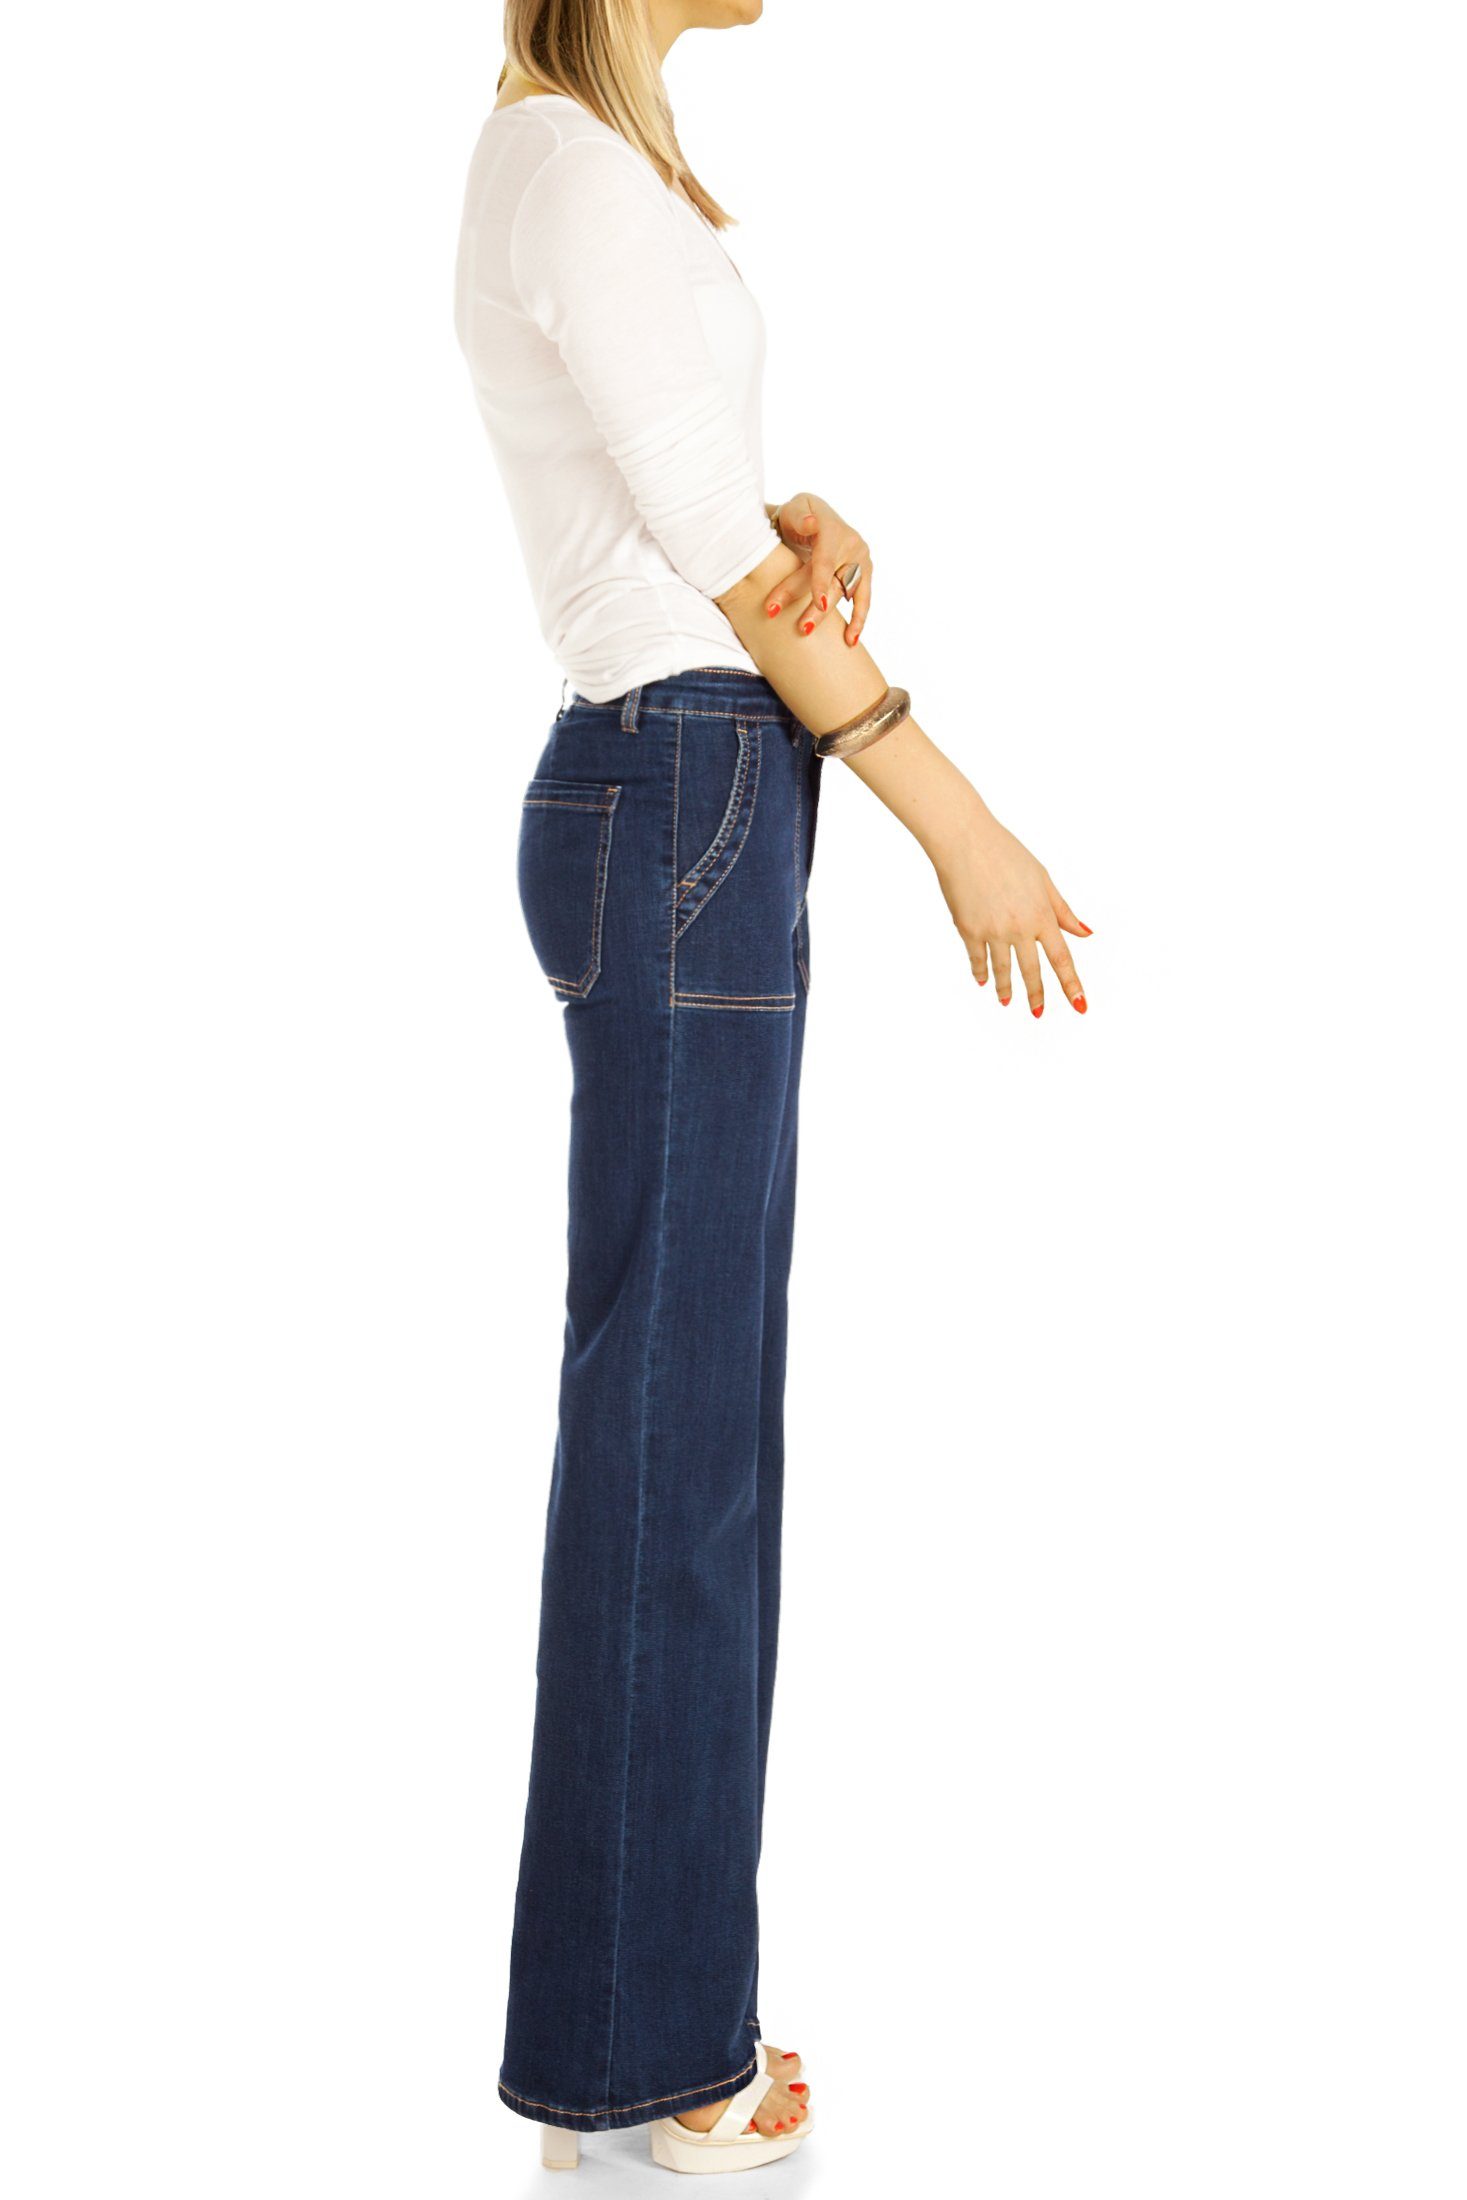 Damen 5-Pocket-Style Bootcut Bootcut-Jeans Jeans, straight Hosen - - mit j31k Stretch-Anteil, styled waist Passform hellblau be medium